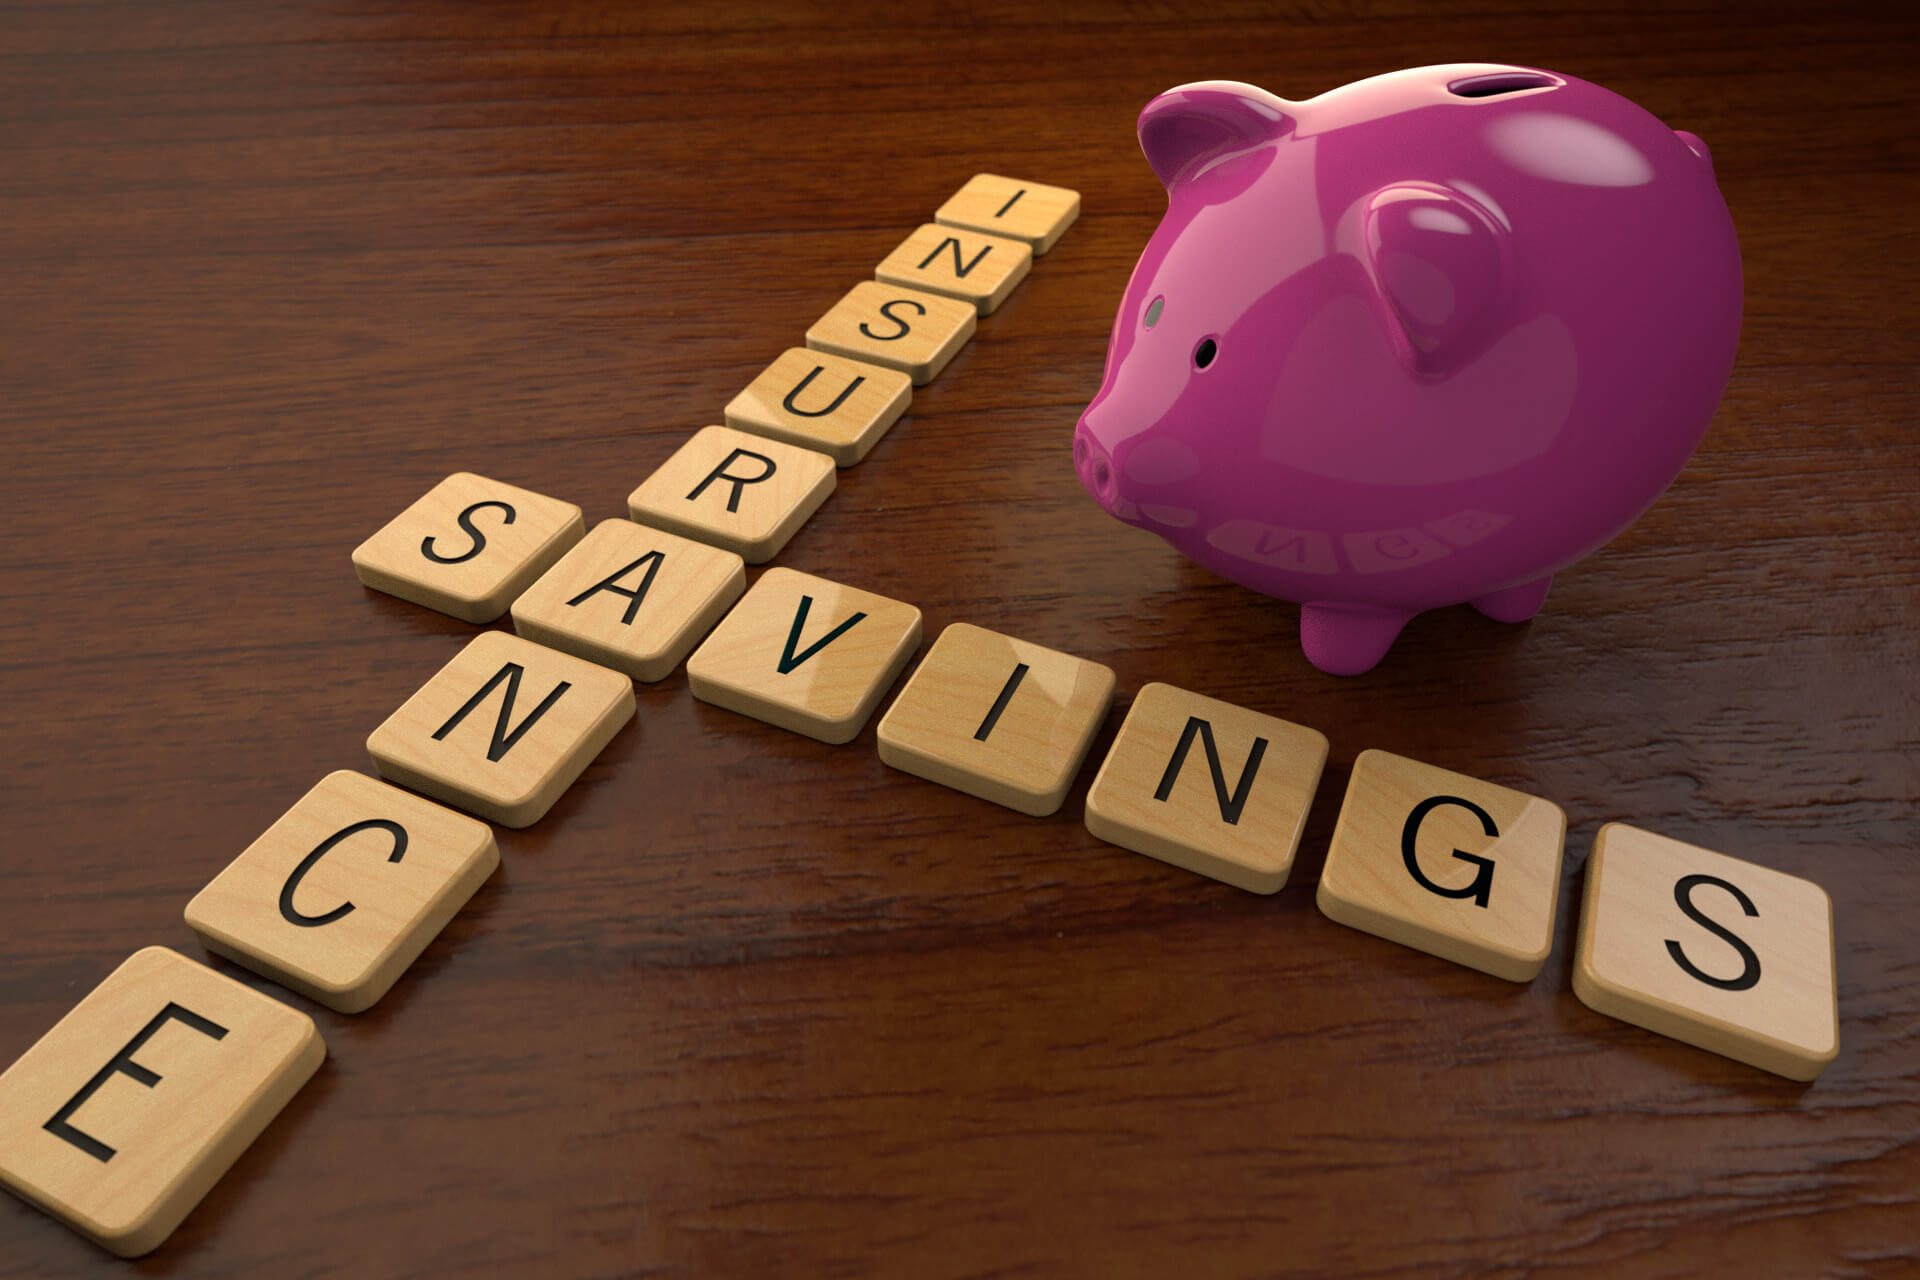 Insurance savings concept free image download